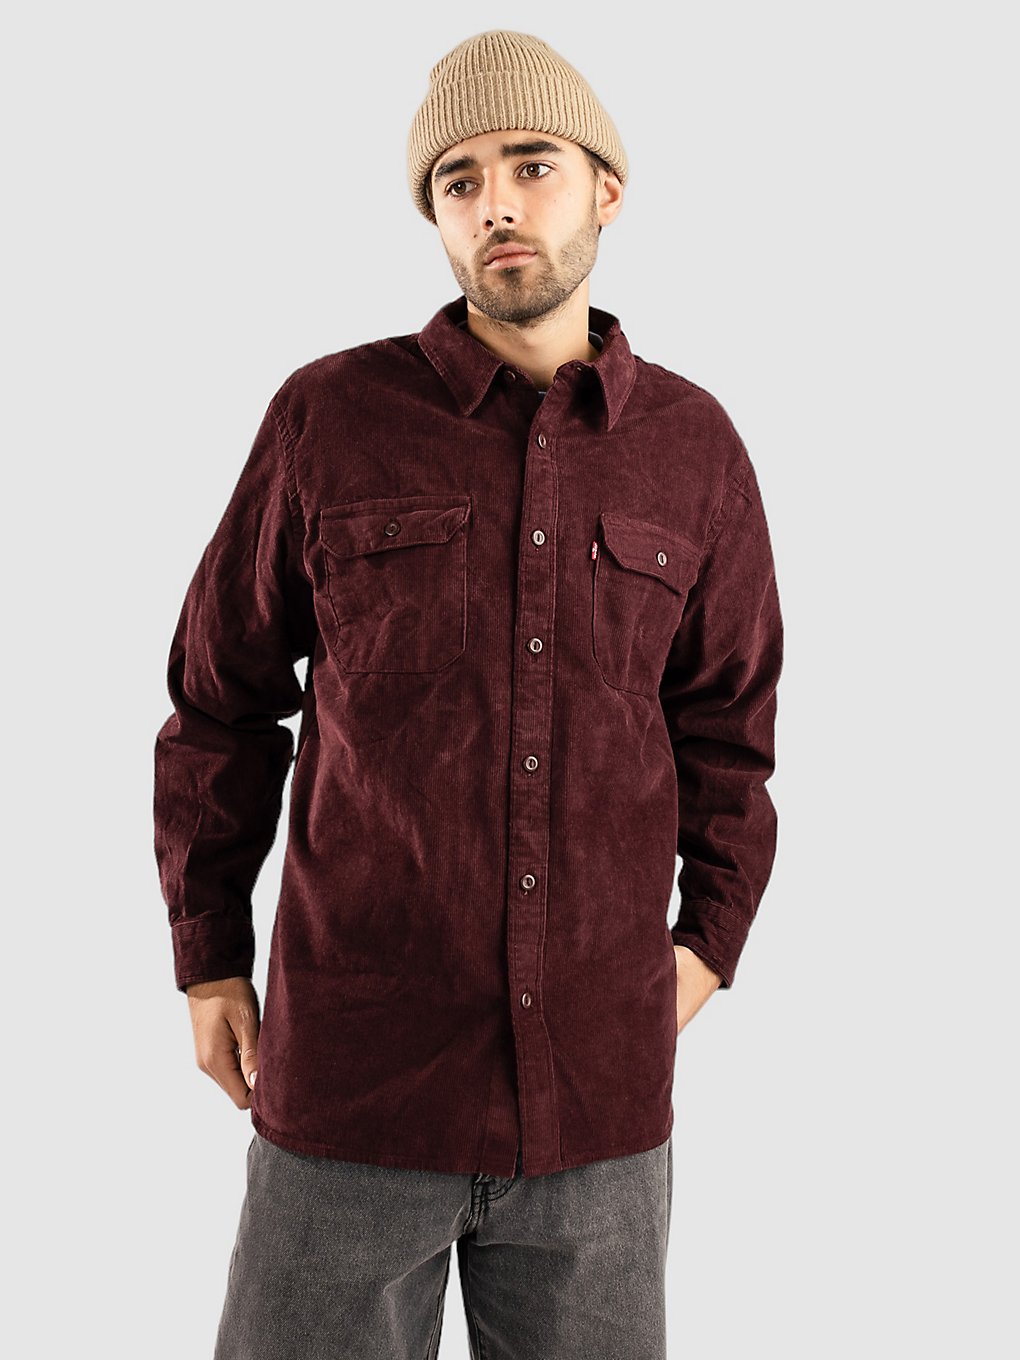 Levi's Jackson Worker Multi-Color Camisa marrón product